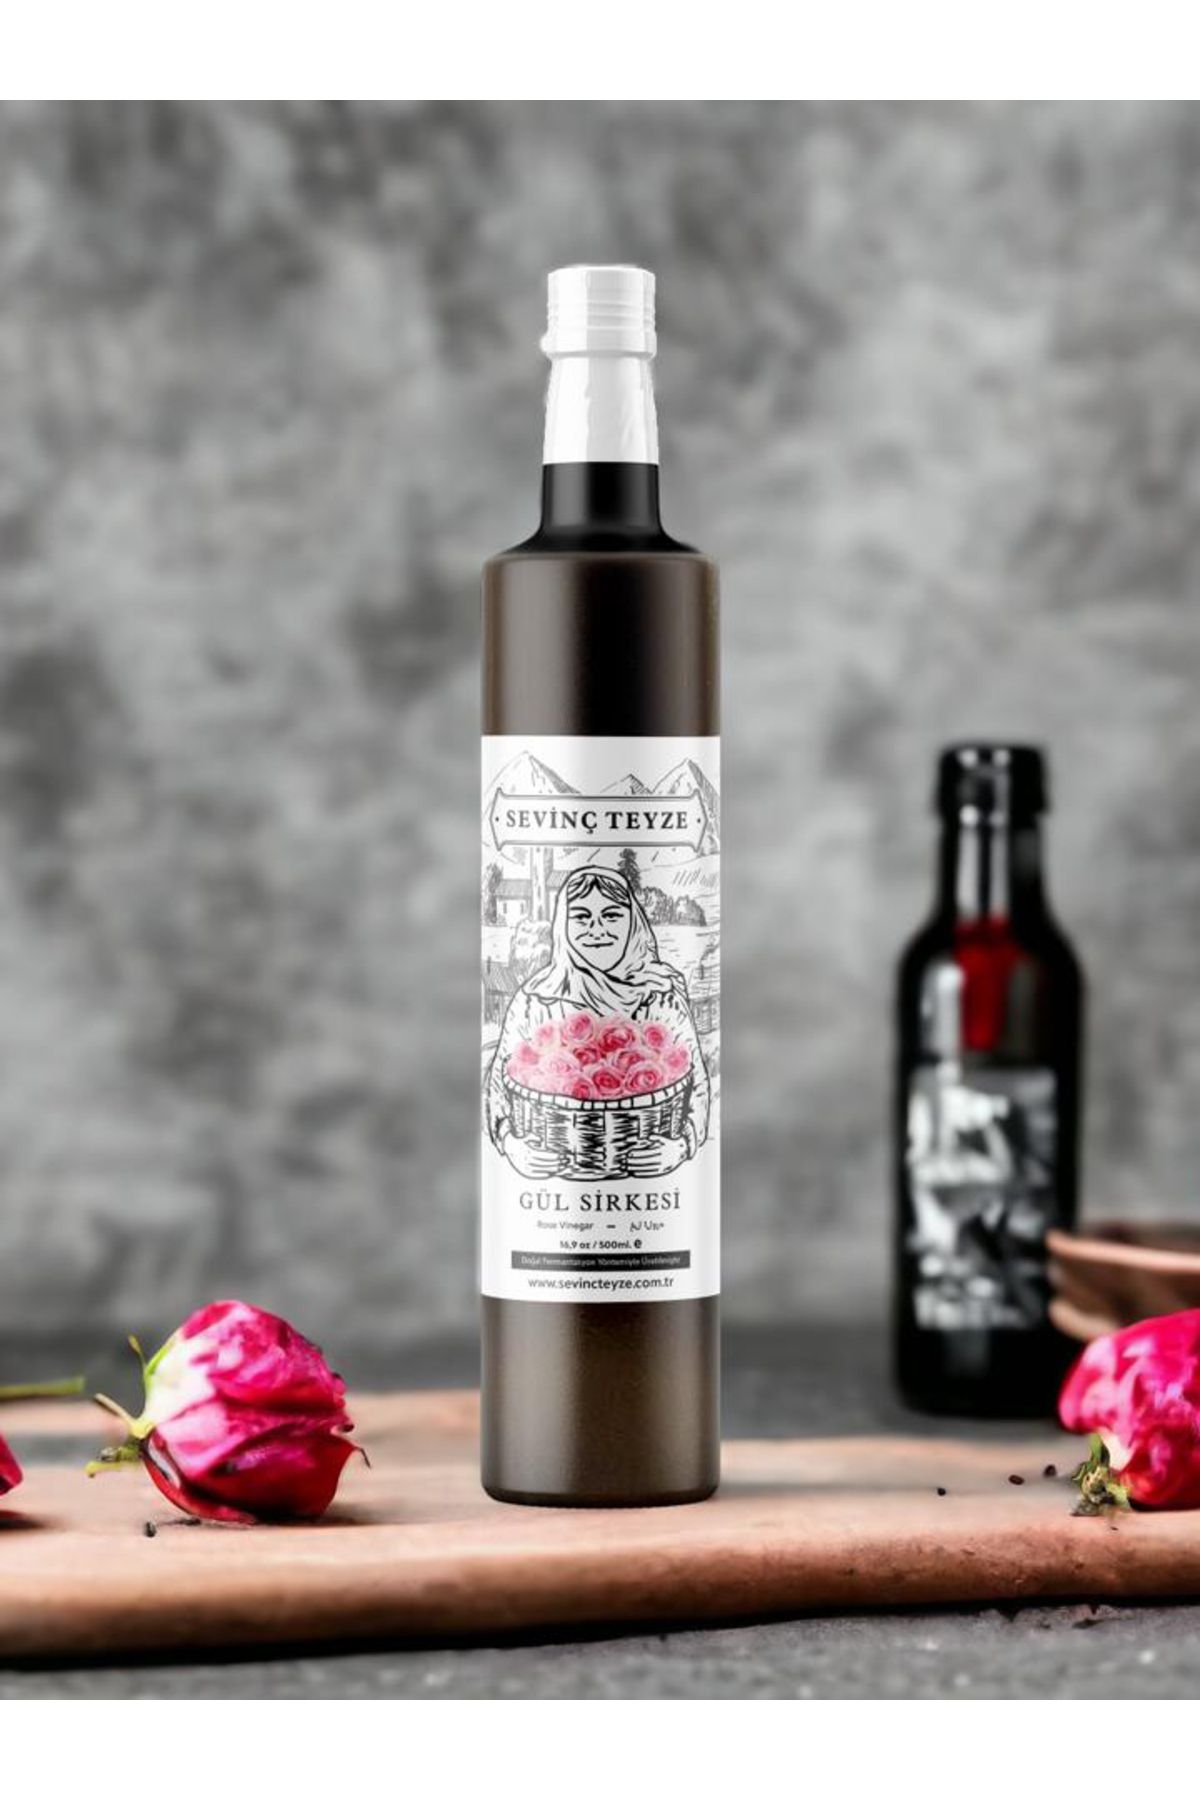 Organik Teyze Sevinç Teyze Doğal Fermantasyon Gül Sirkesi, Rose Vinegar 500ml.